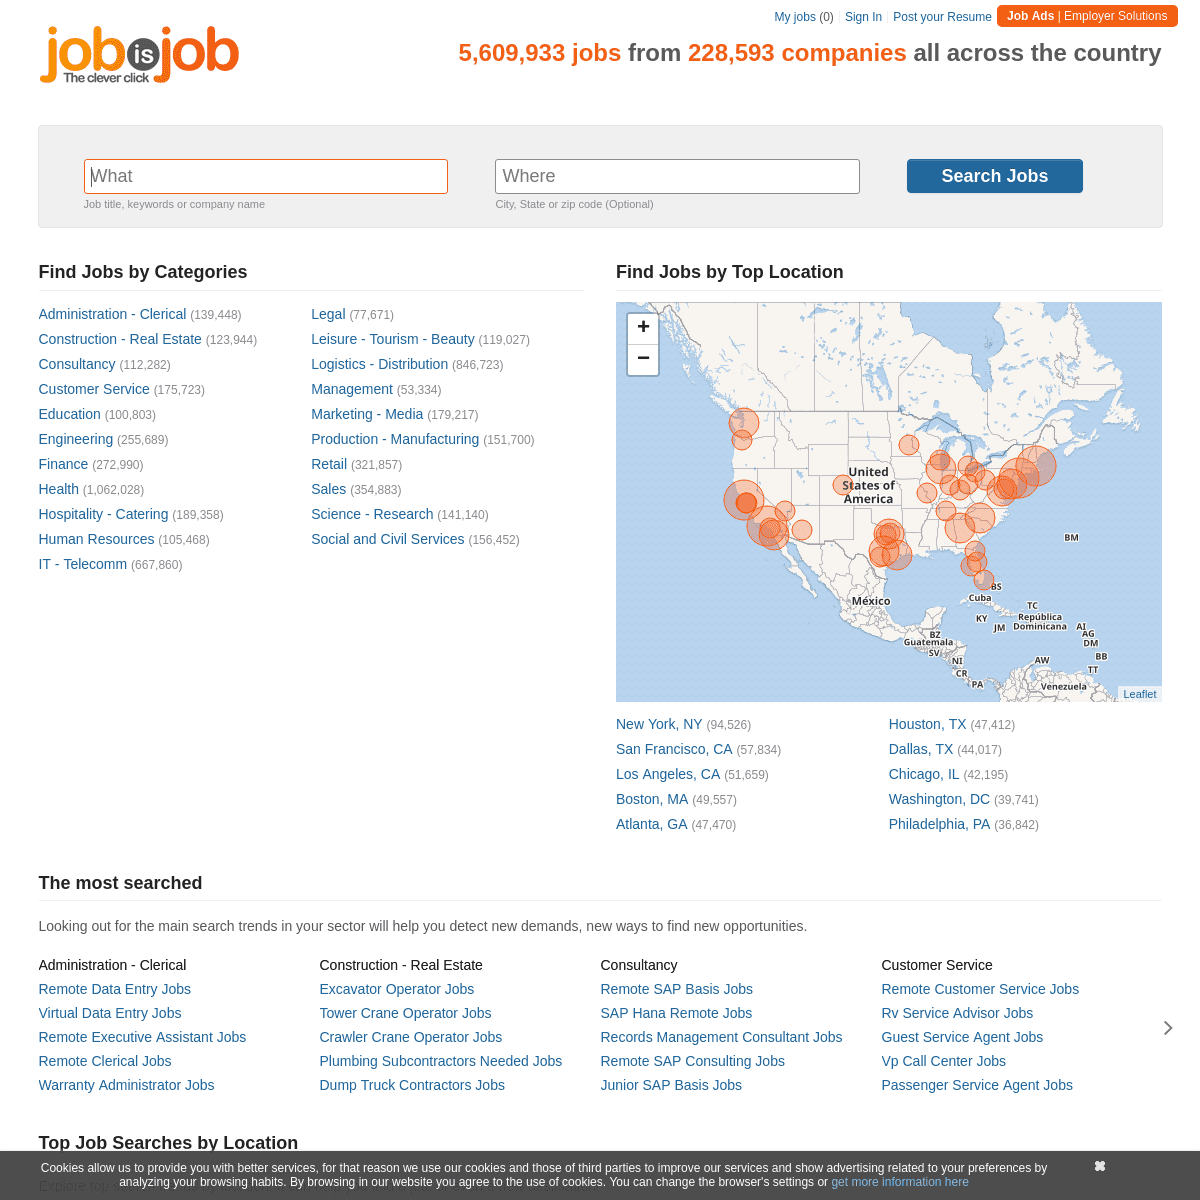 A complete backup of jobisjob.com